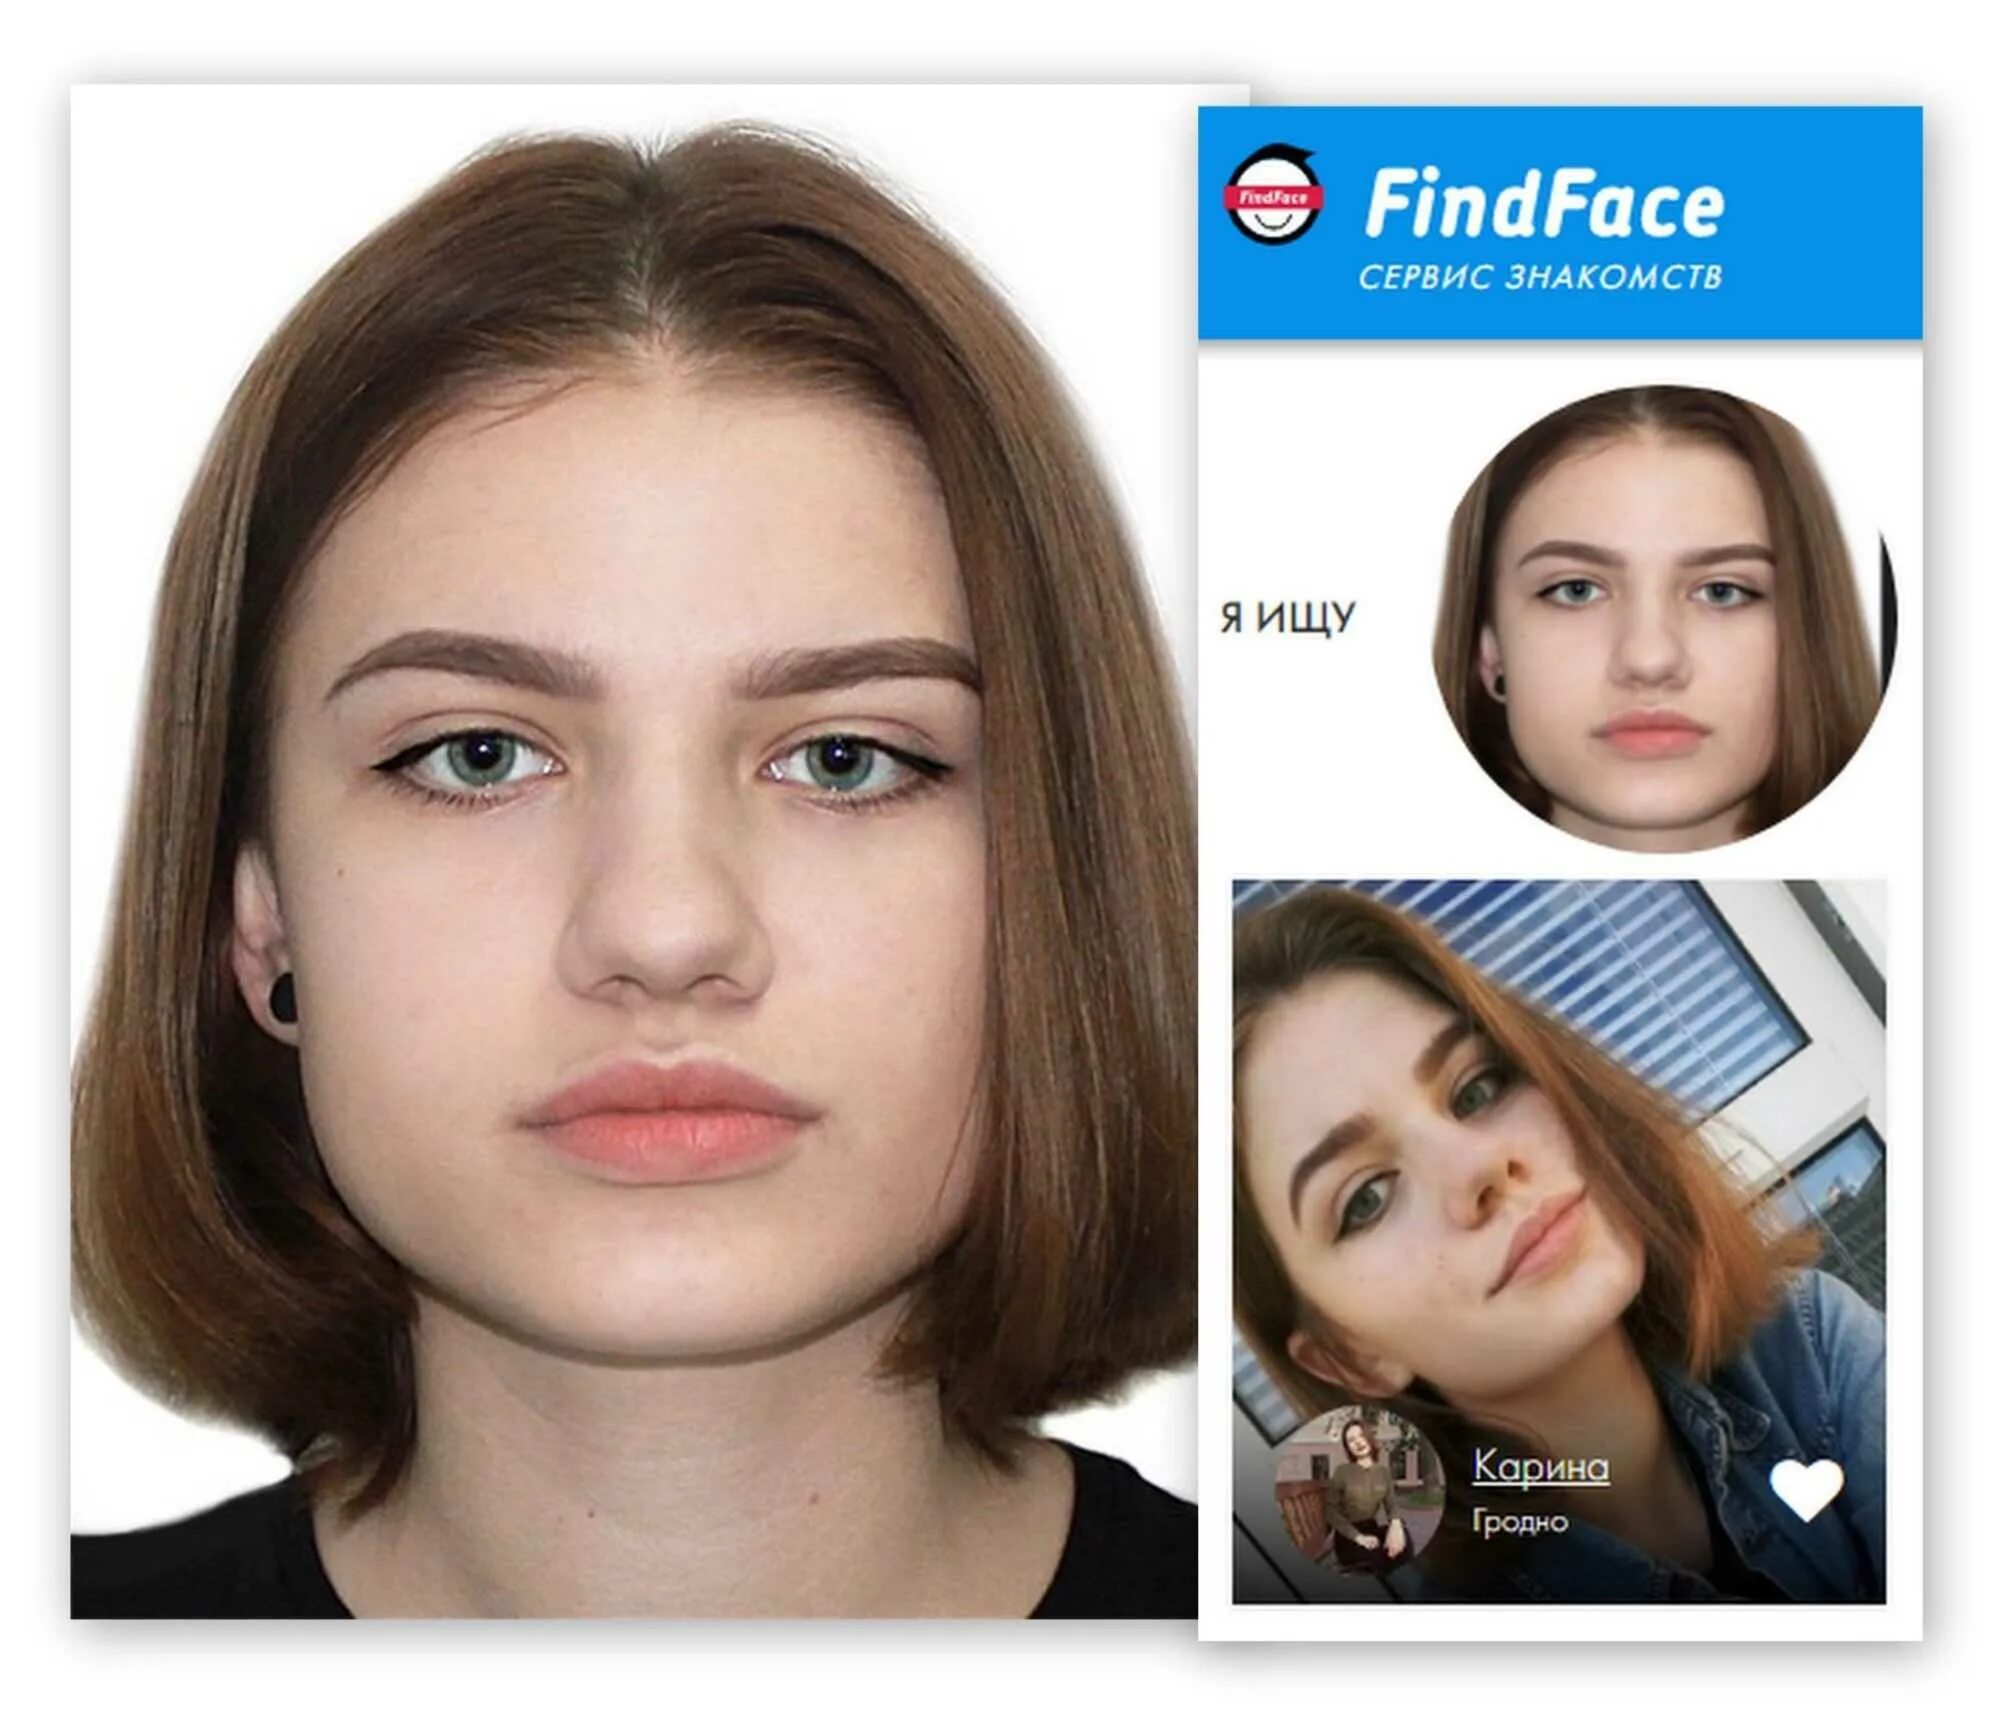 FINDFACE. FINDFACE фото. Поиск фото лица. Узнать лицо по фото. Приложение для поиска по фото